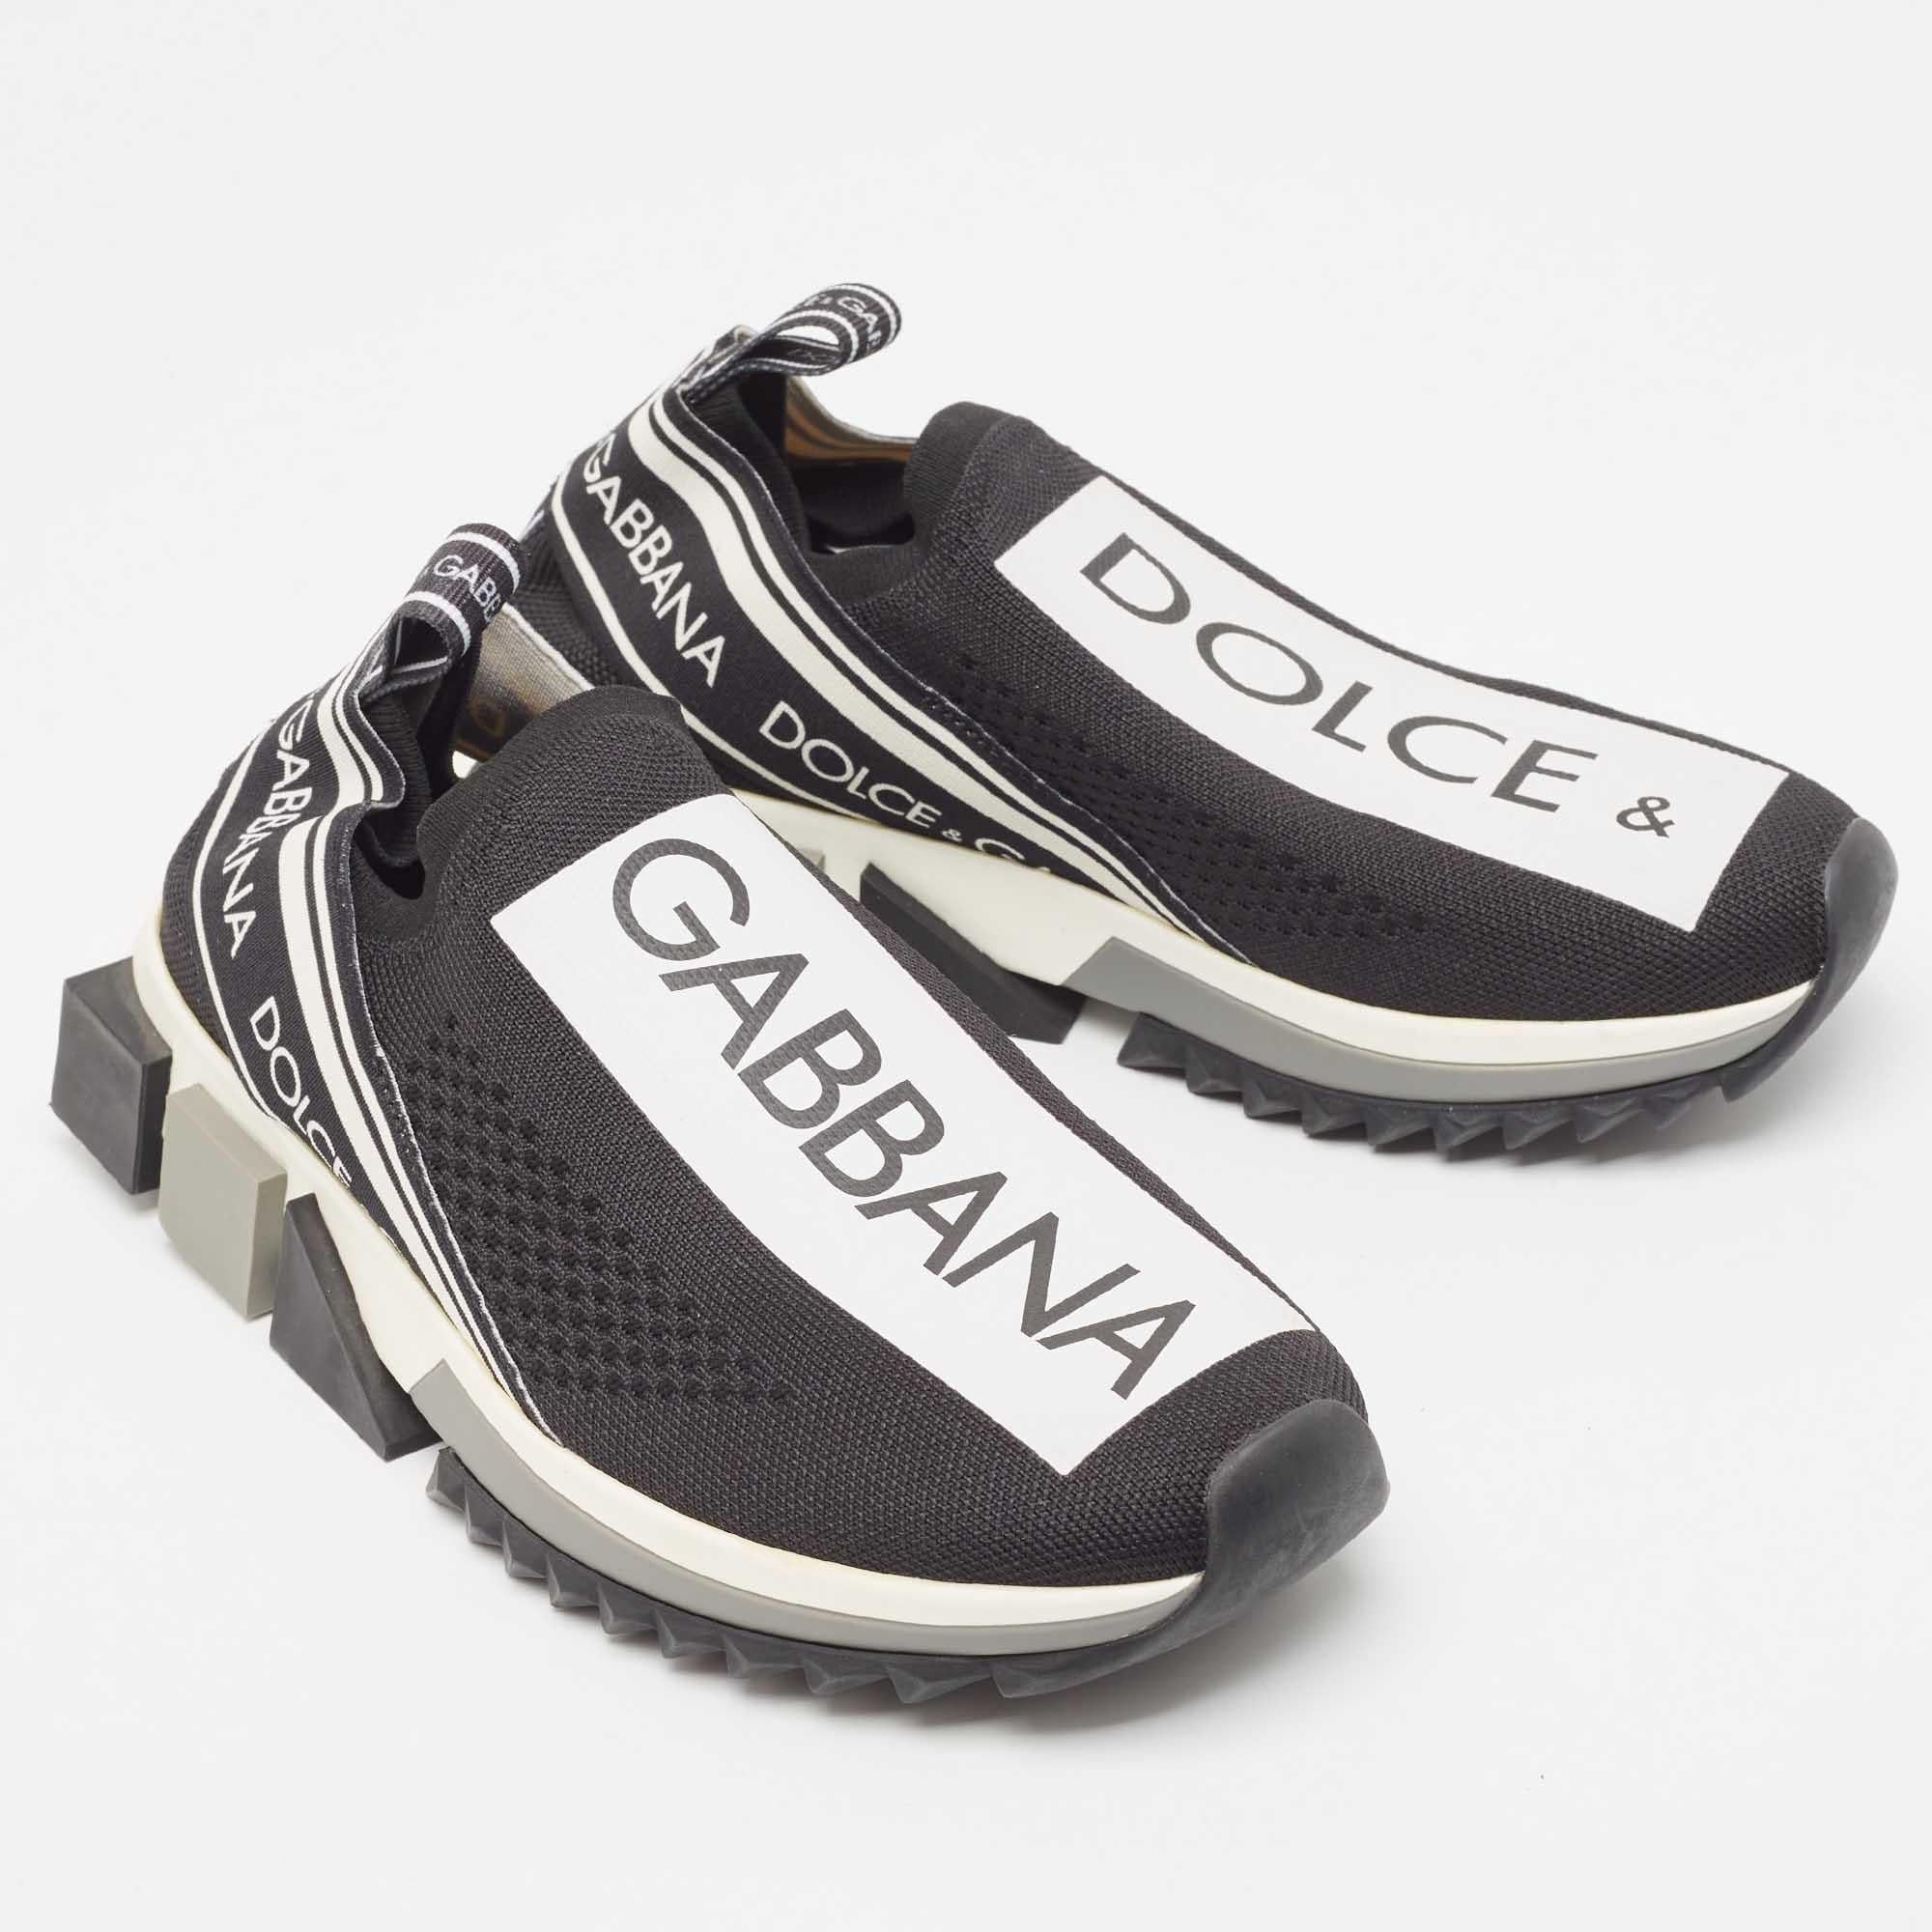 Dolce & Gabbana Black Knit Fabric Sorrento Sneakers Size 38 In Excellent Condition For Sale In Dubai, Al Qouz 2